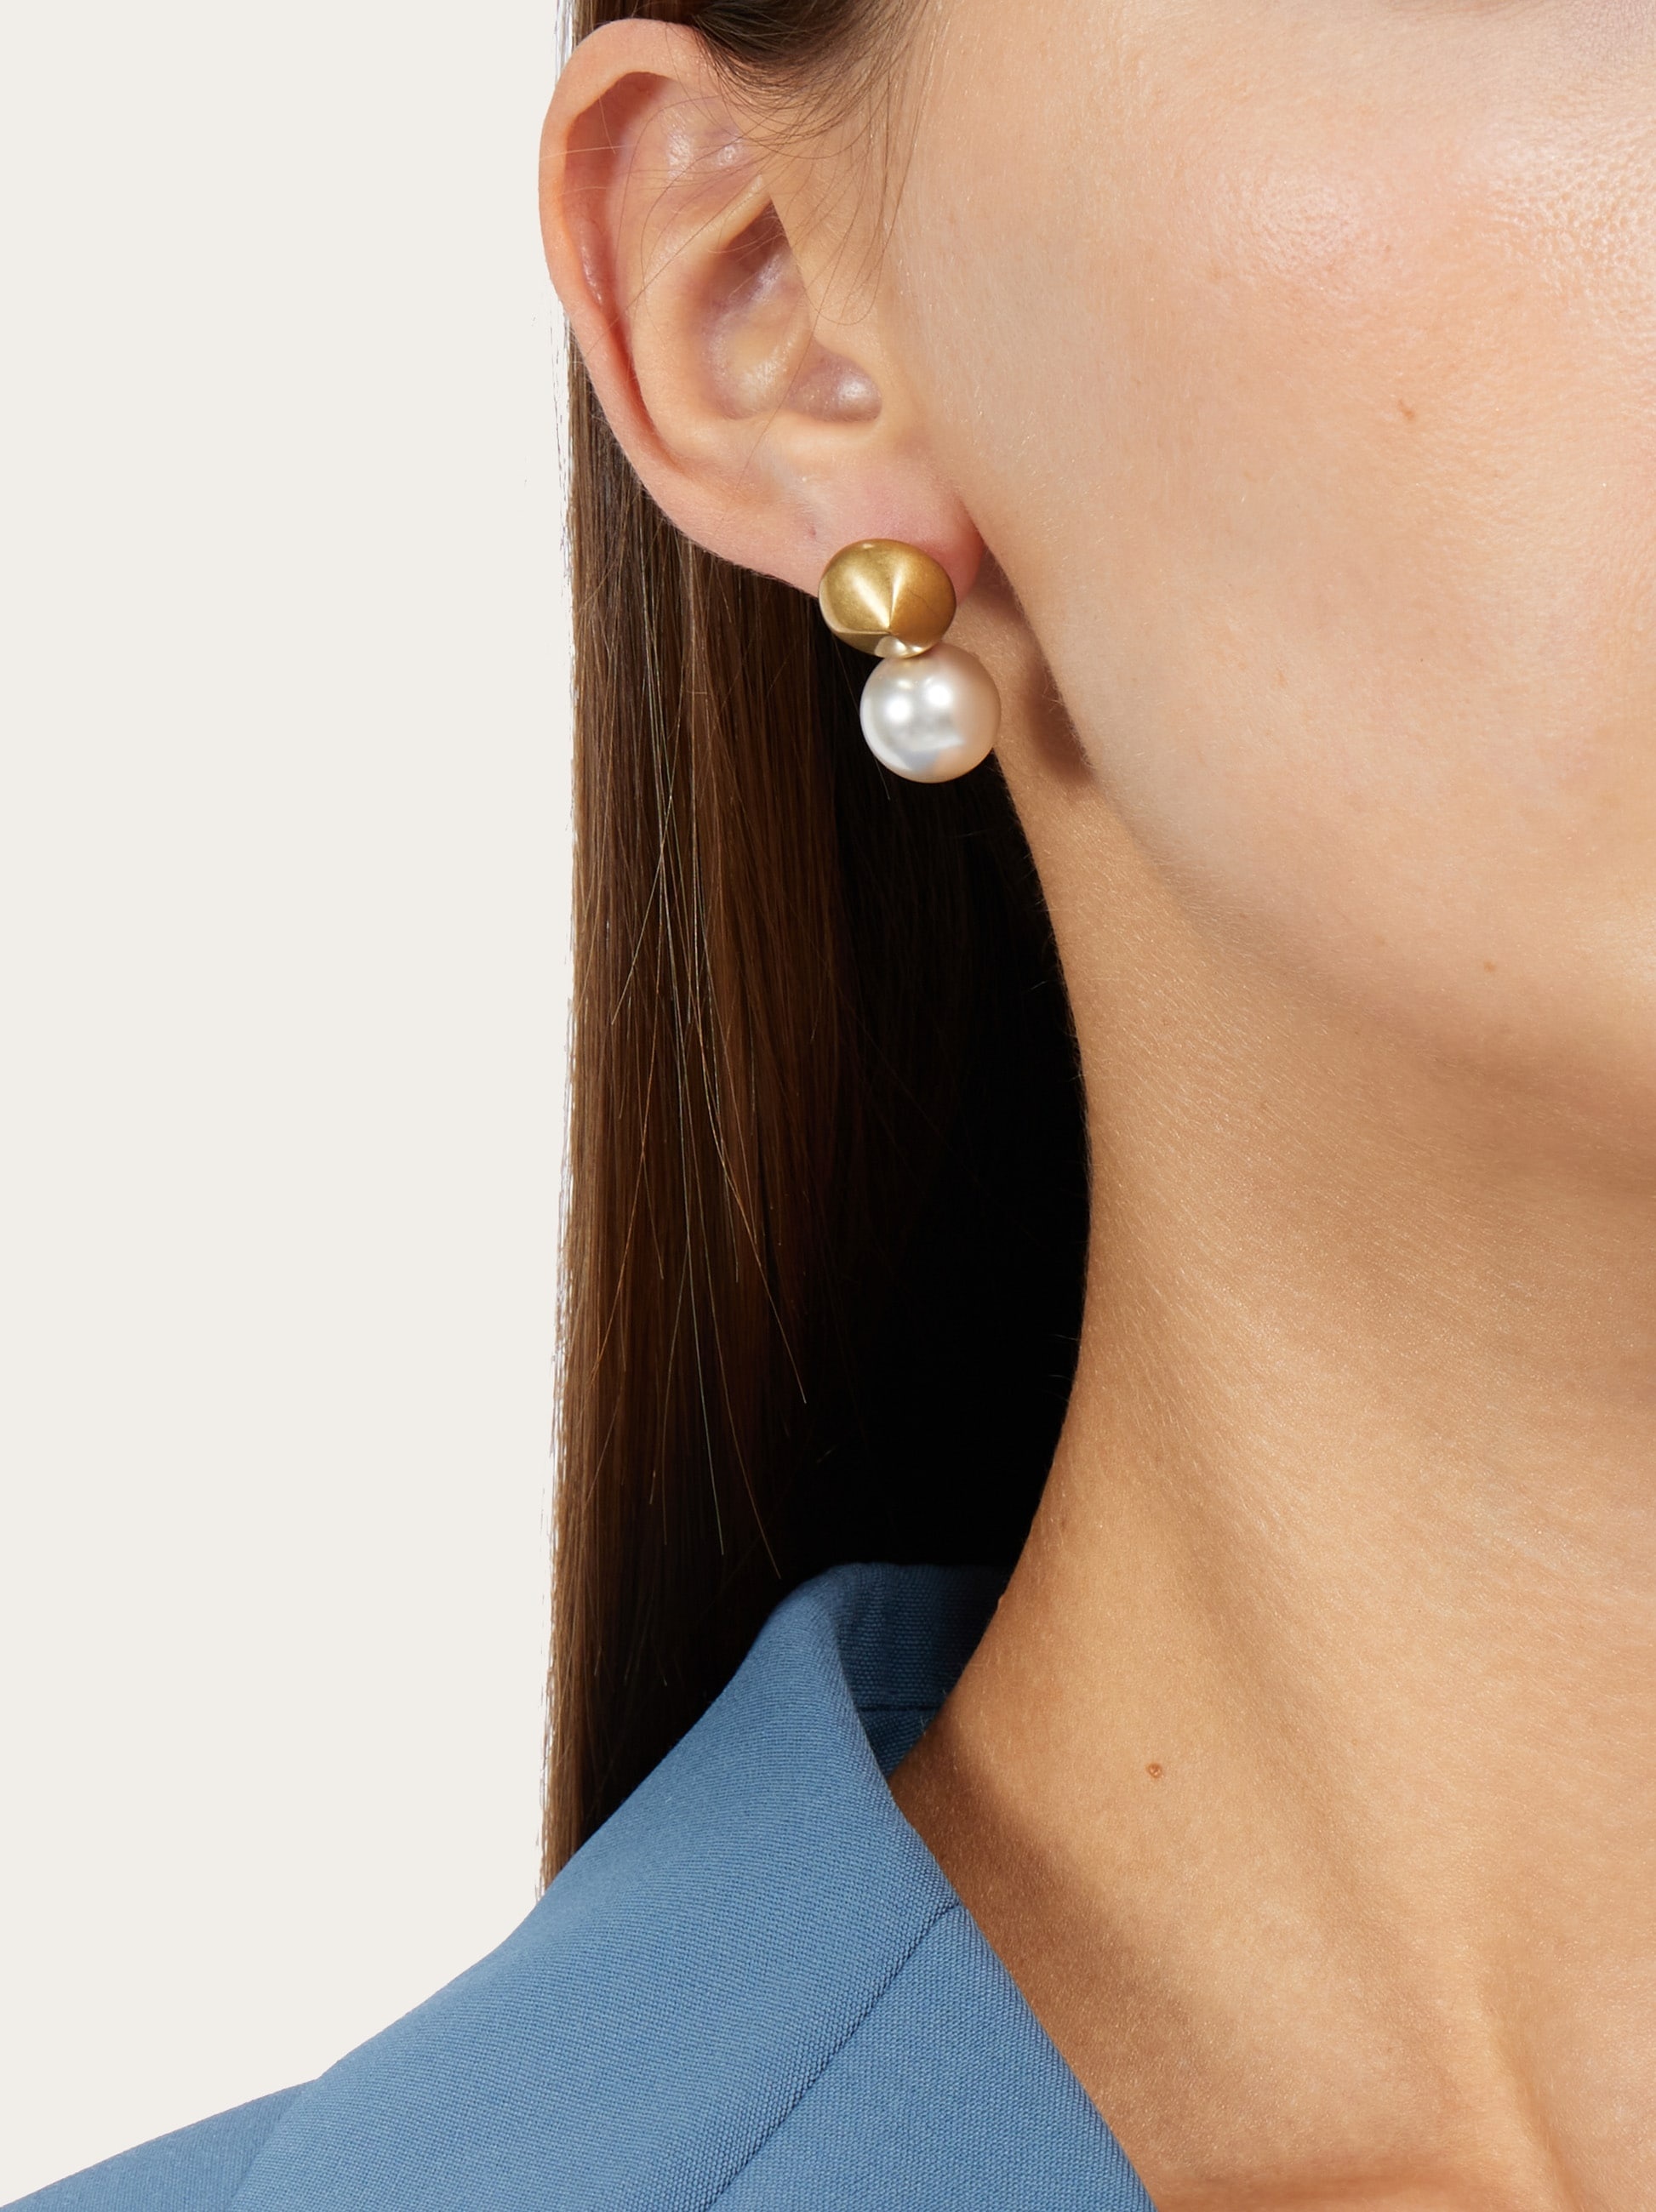 Earrings with bead pendant - 4